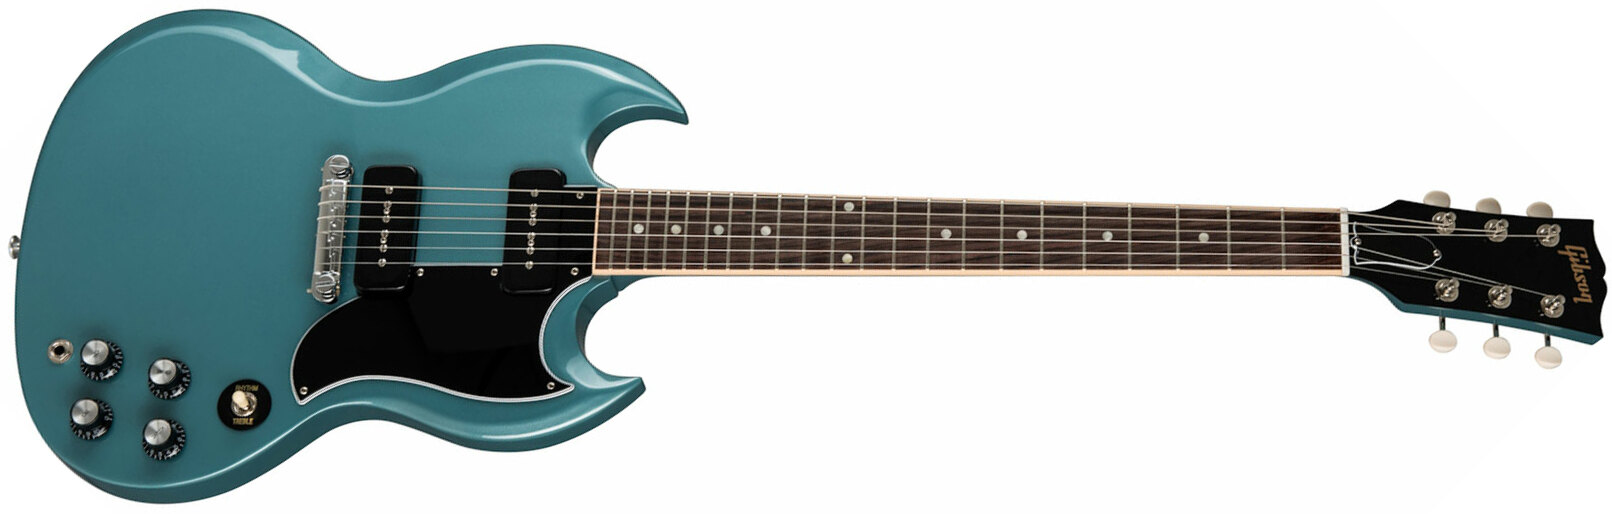 Gibson Sg Special Original P90 - Pelham Blue - Retro-rock elektrische gitaar - Main picture